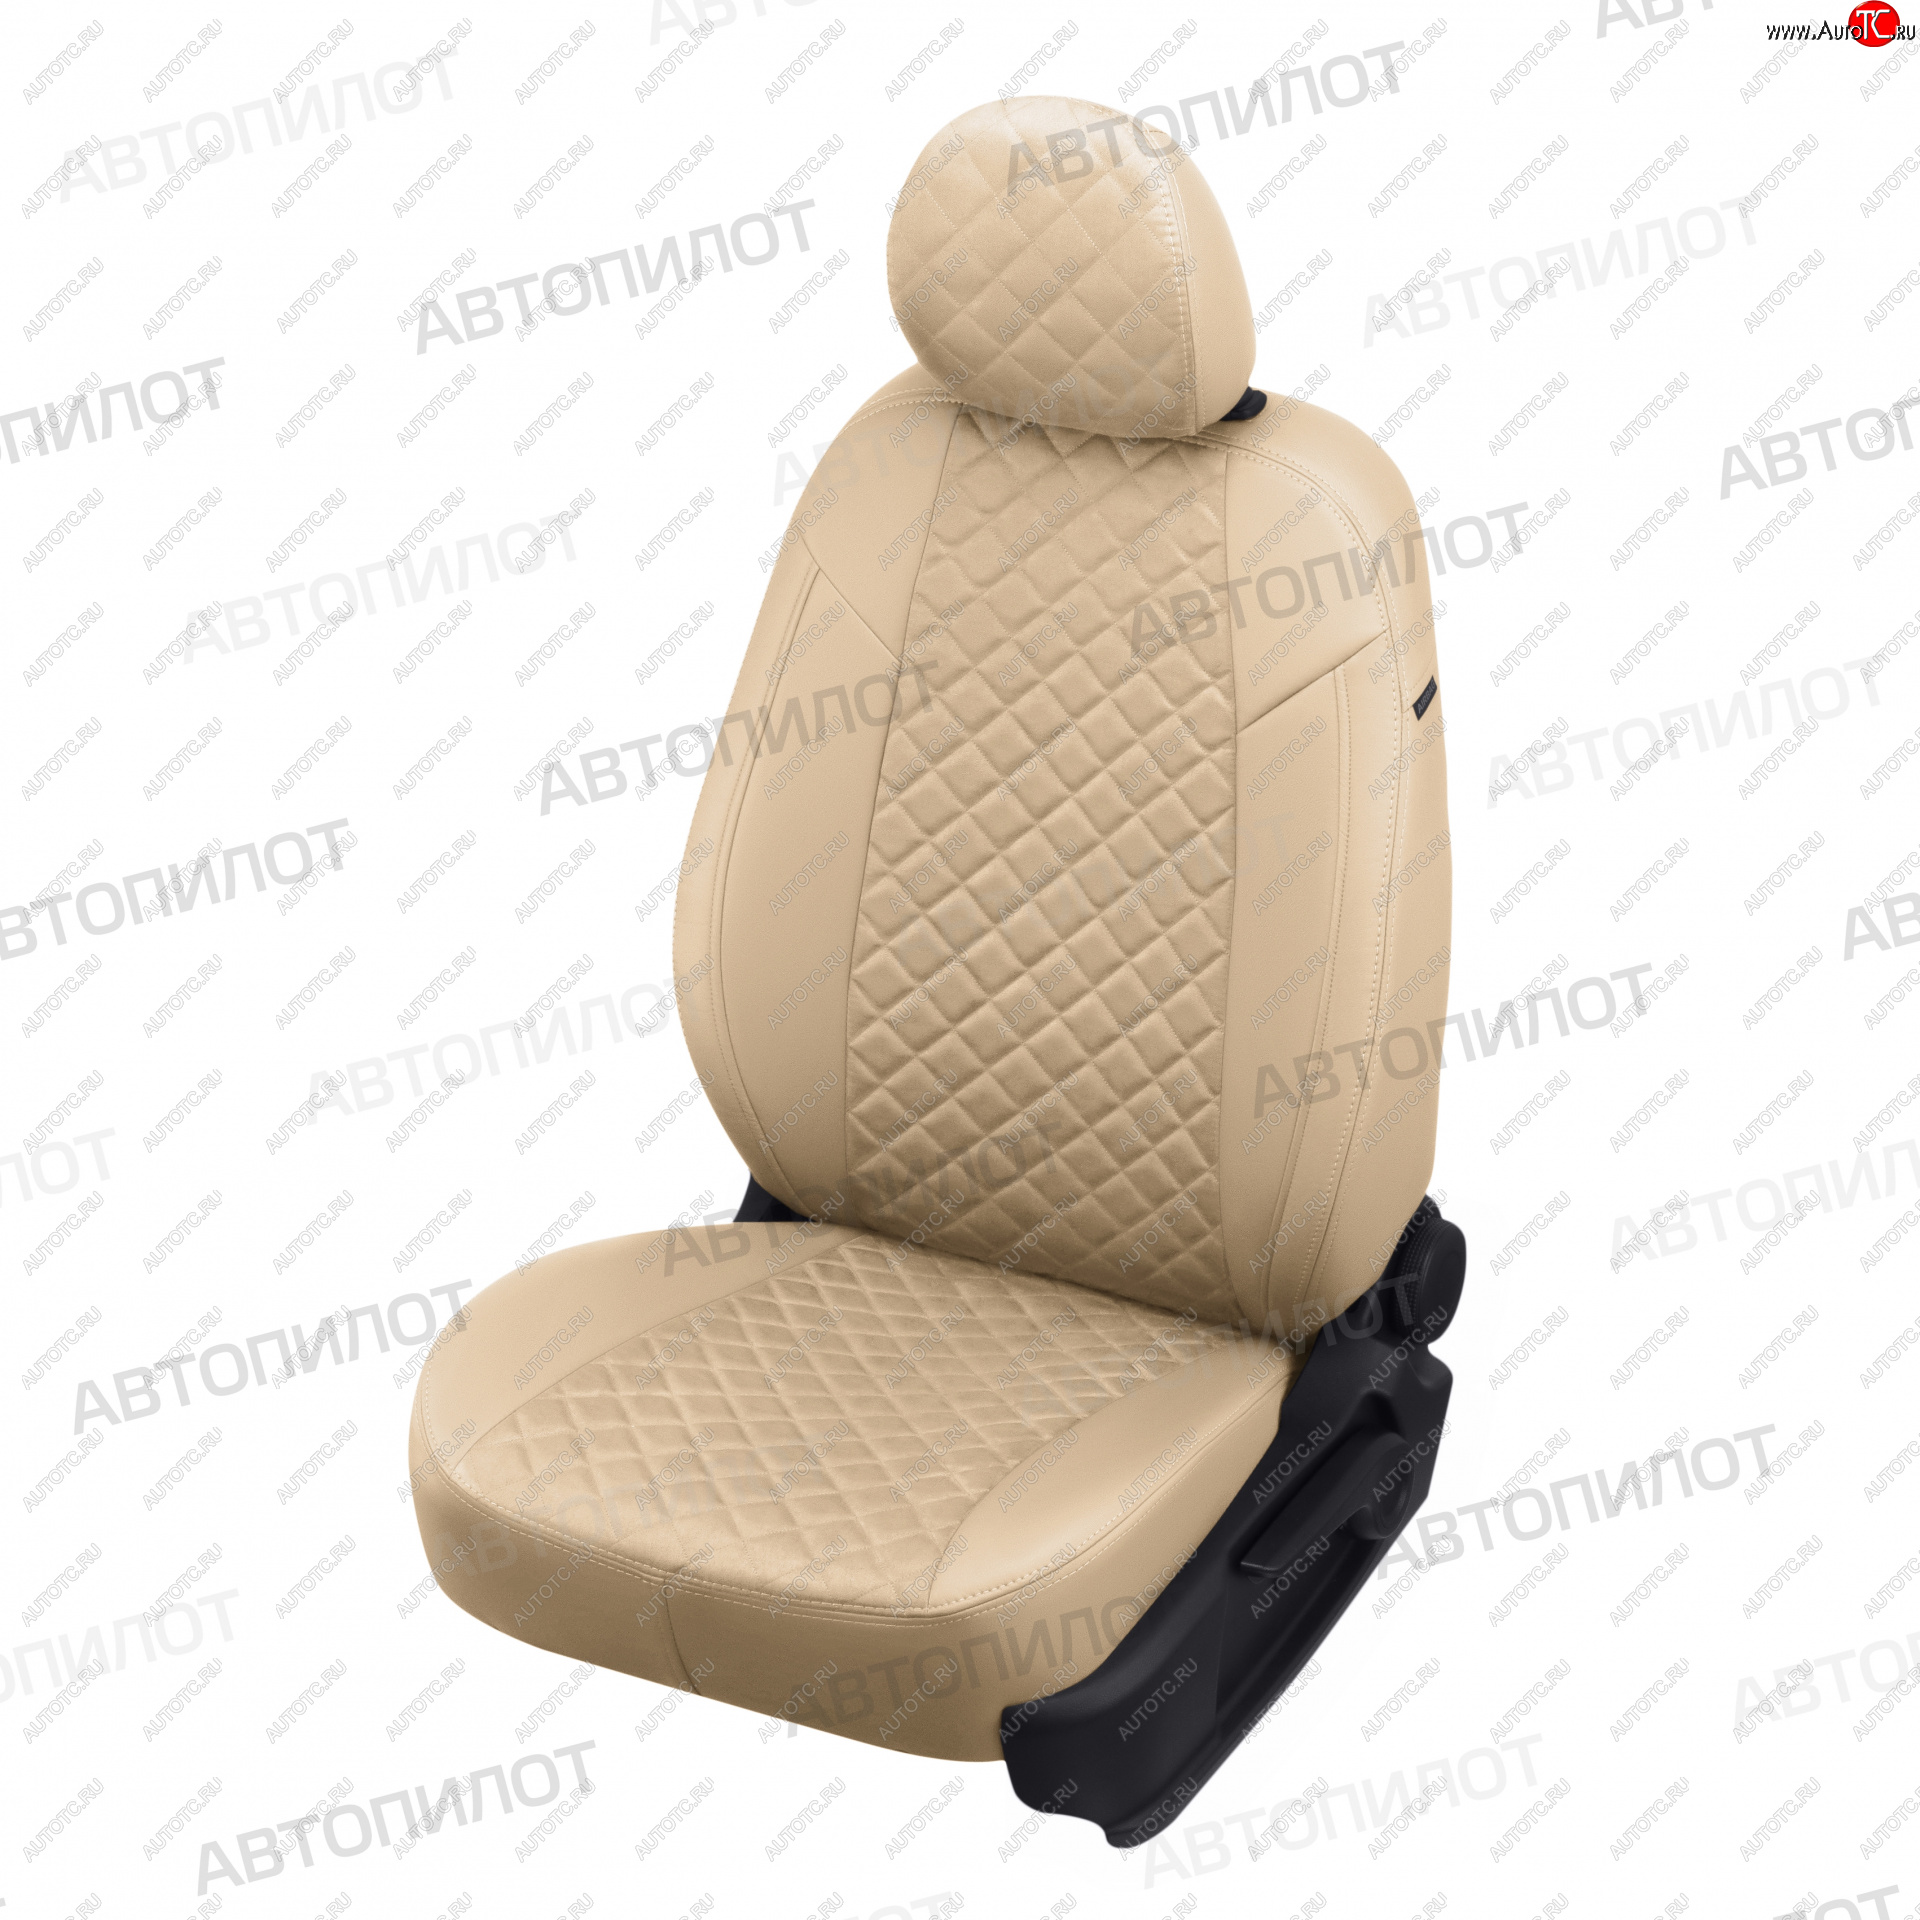 13 999 р. Чехлы сидений (экокожа/алькантара) Автопилот Ромб  Ford Fiesta  5 (2001-2008) (бежевый)